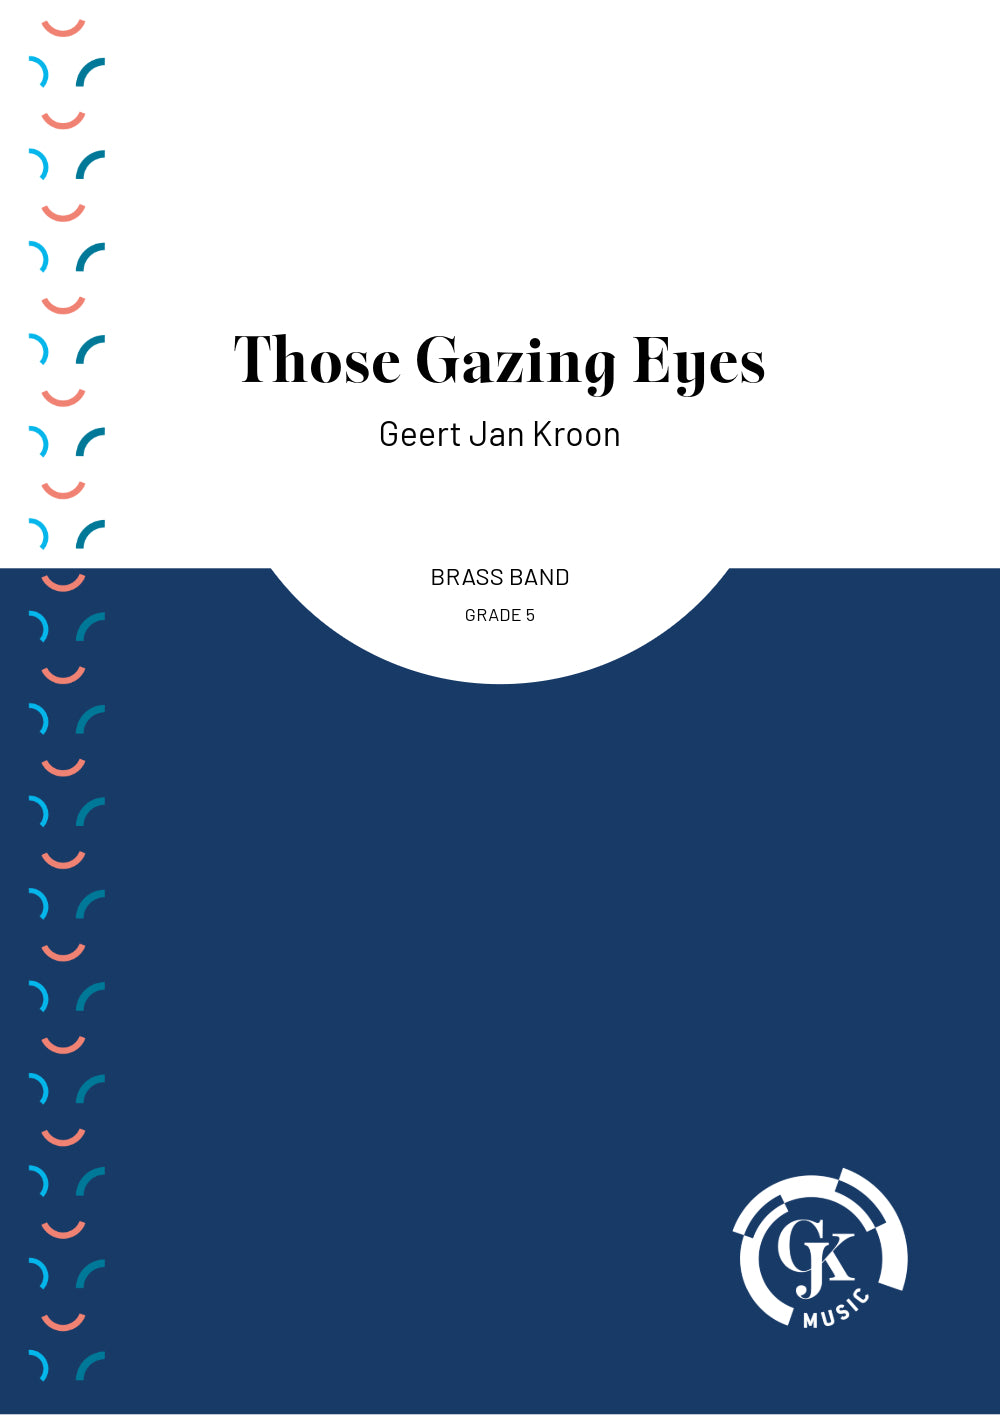 Those Gazing Eyes - Brass Band